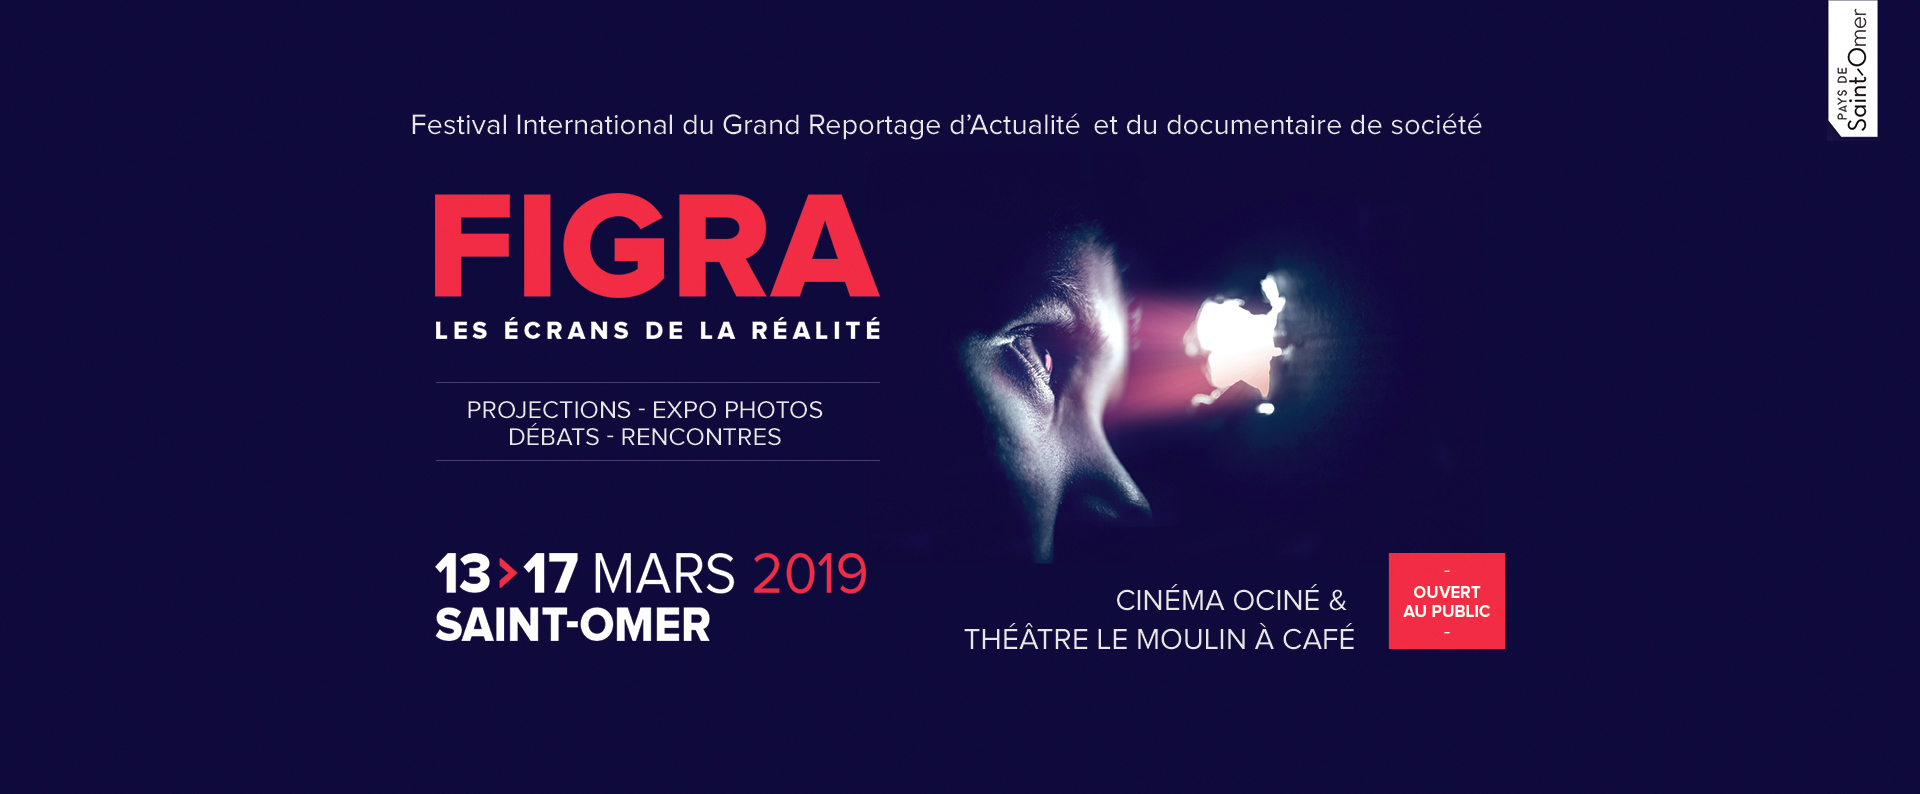 slide-figra-accueil-2019